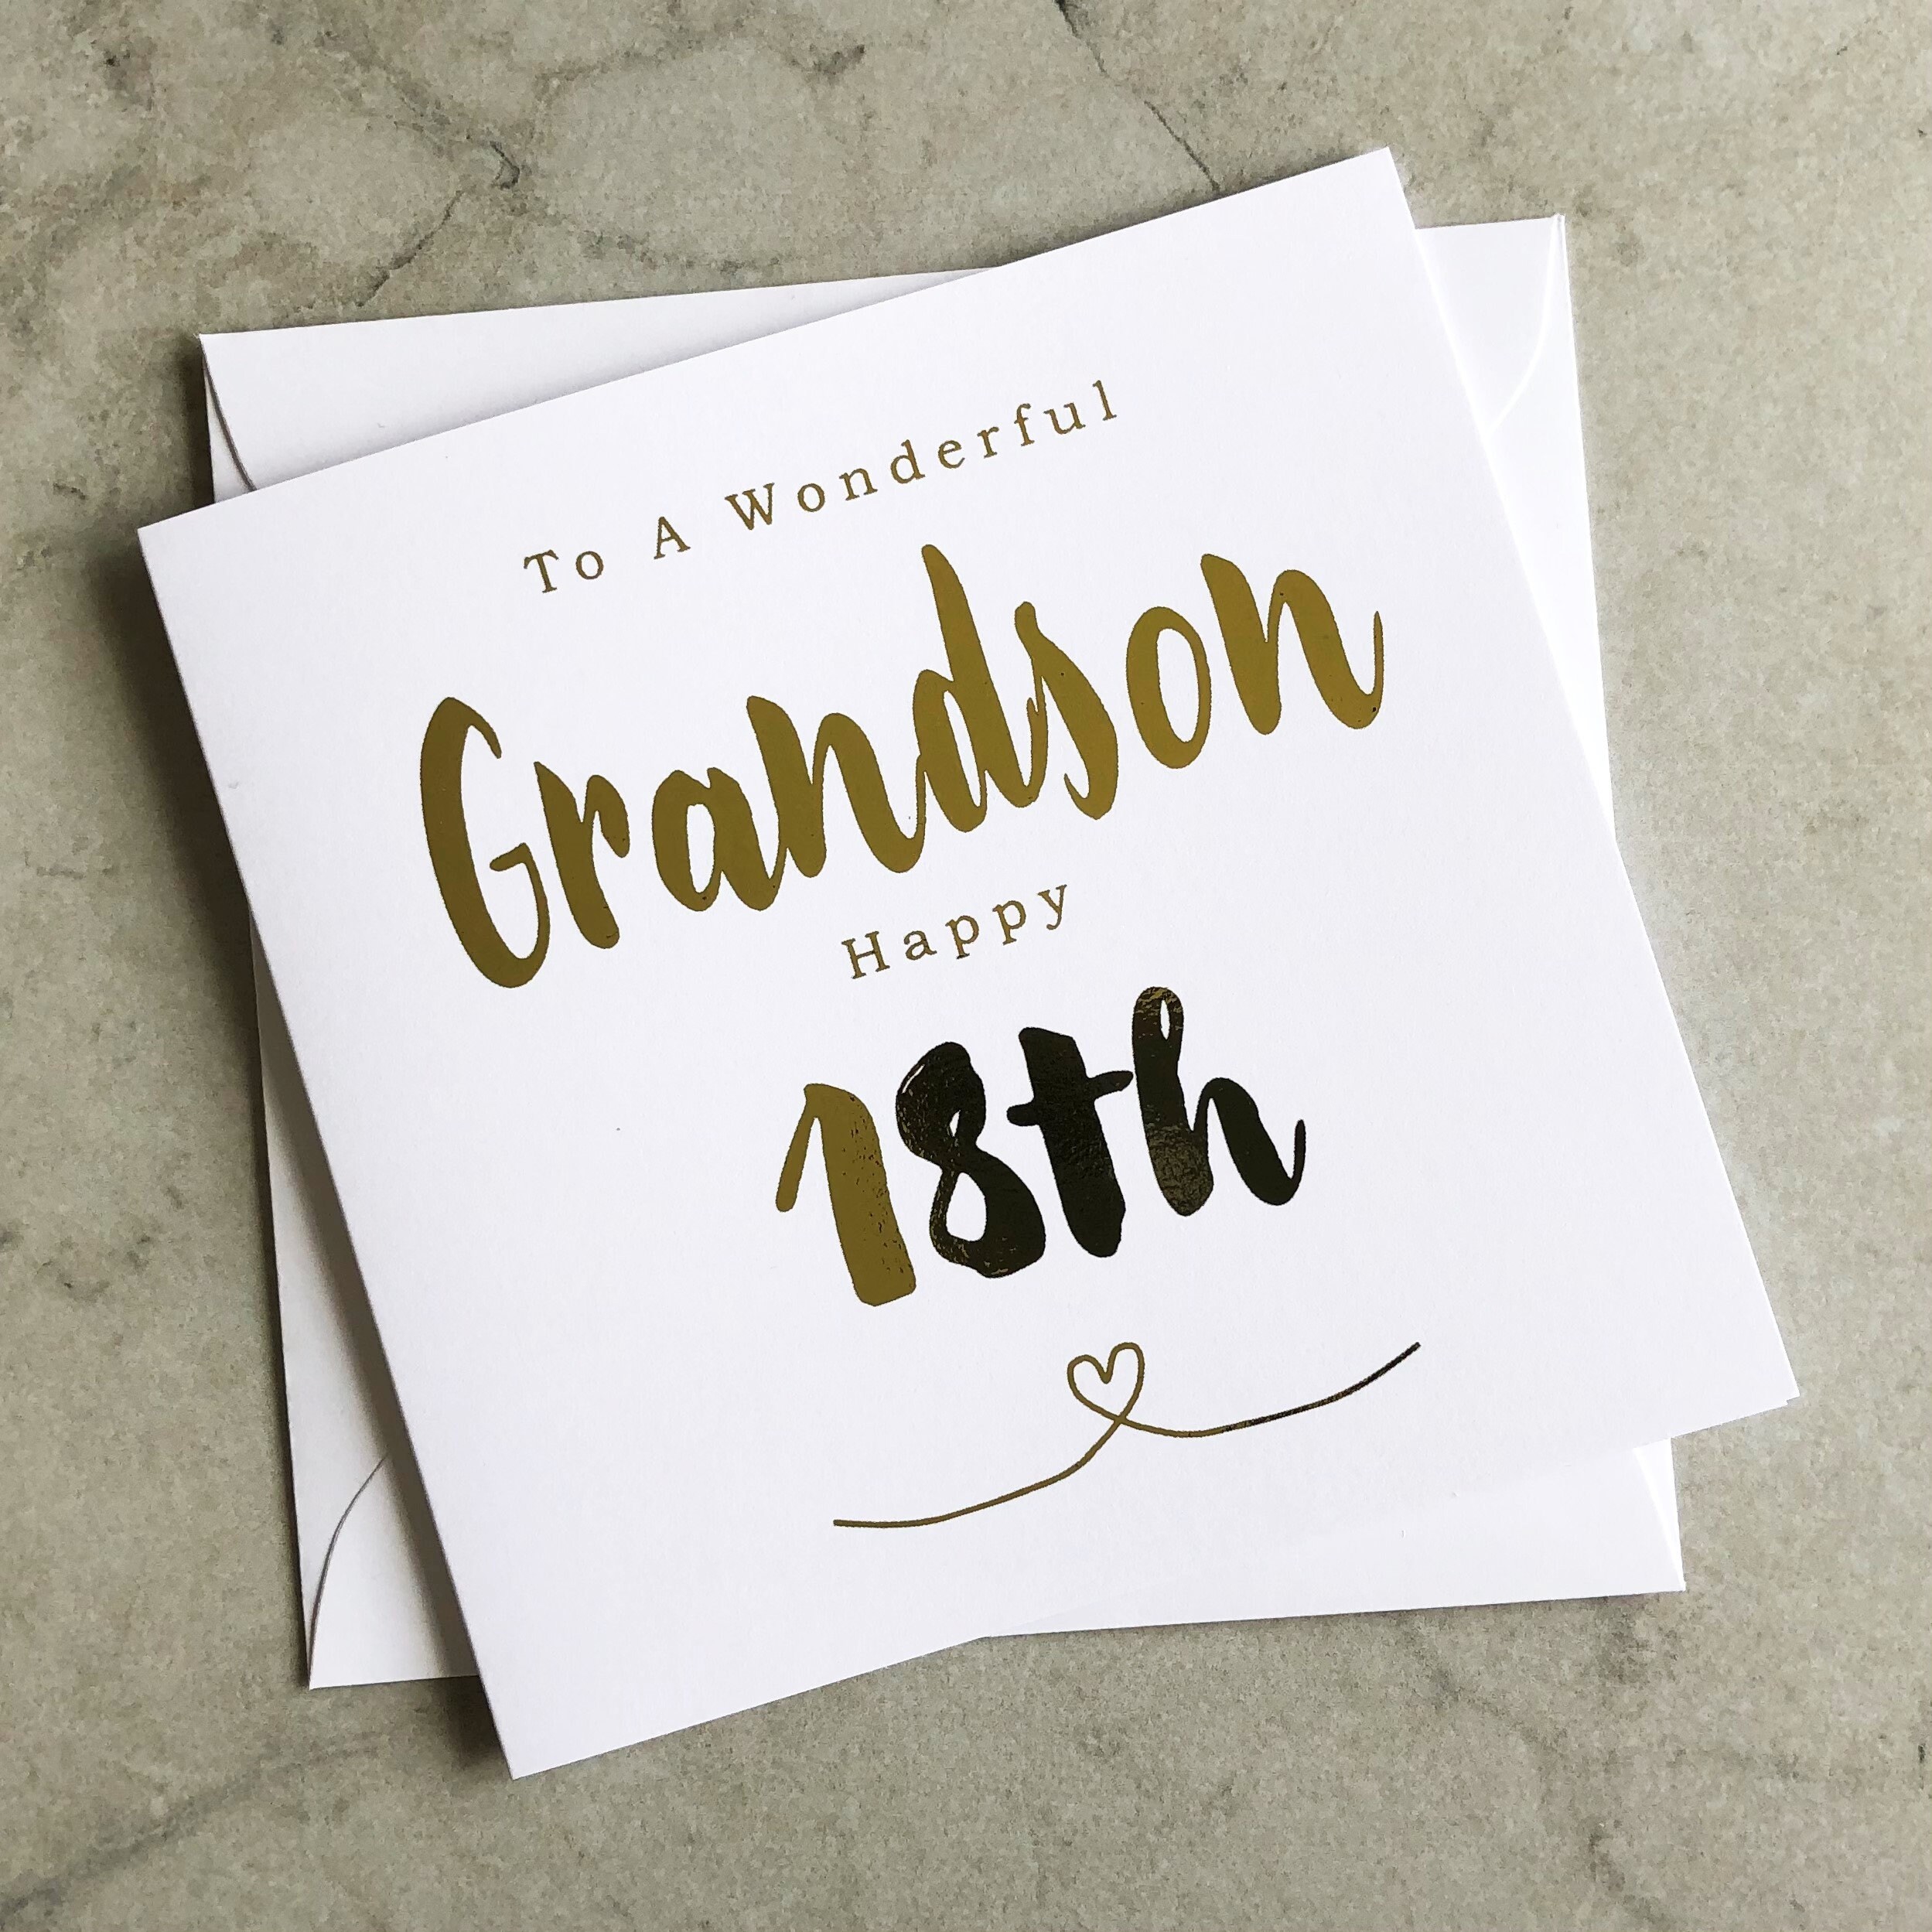 grandson-18th-birthday-card-18th-birthday-card-for-grandson-etsy